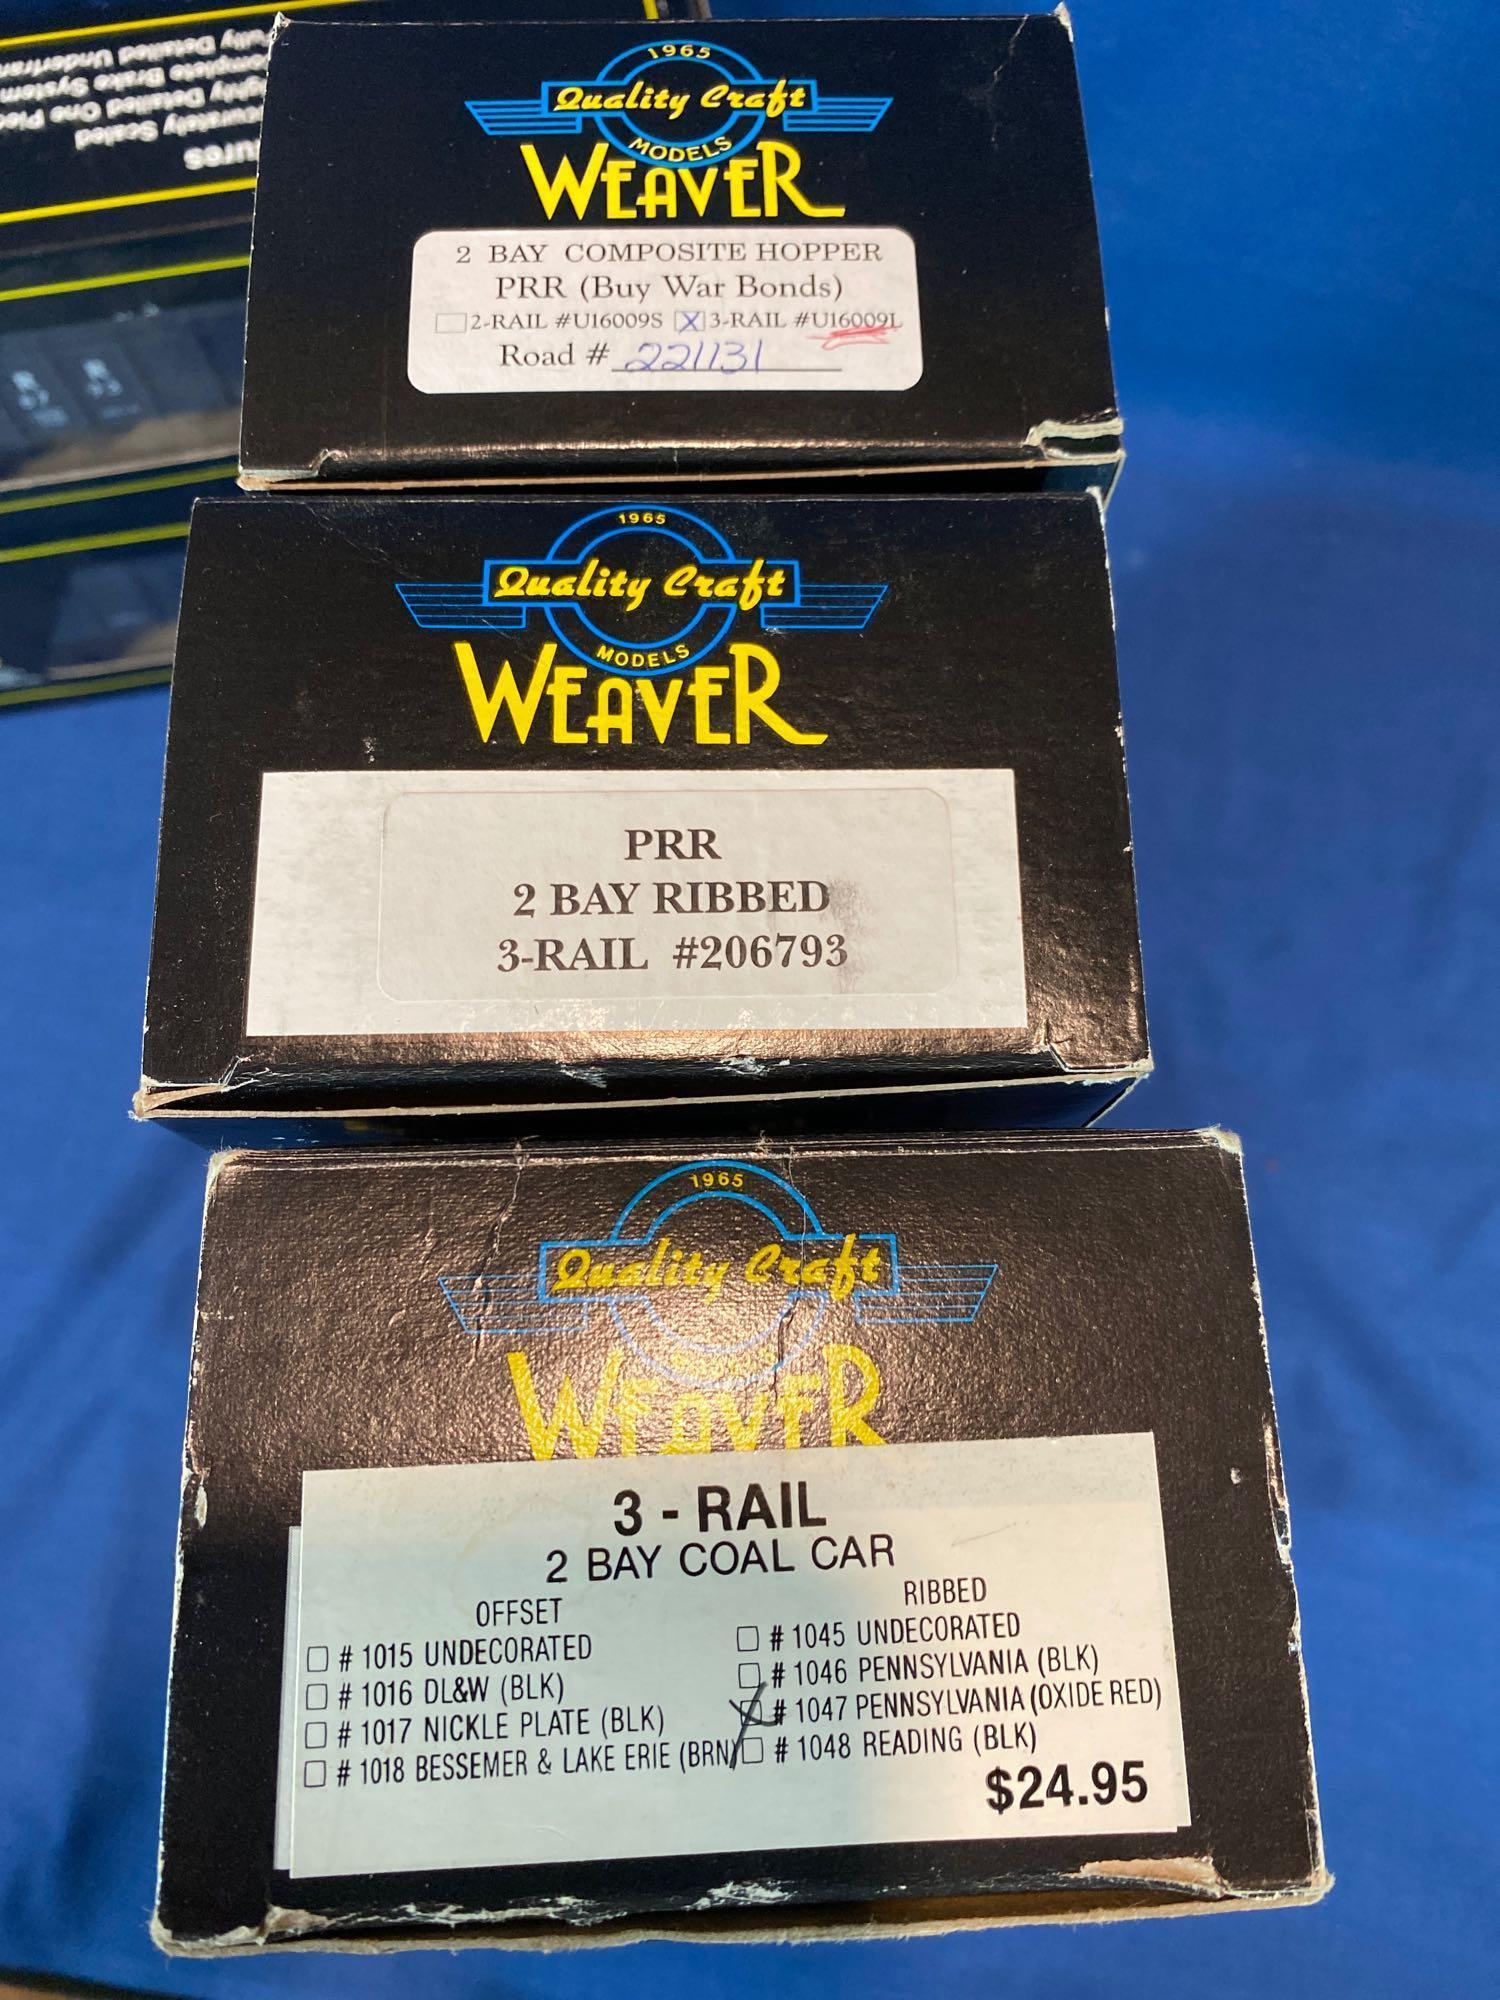 Weaver Ultra Line Pennsylvania railroad cars